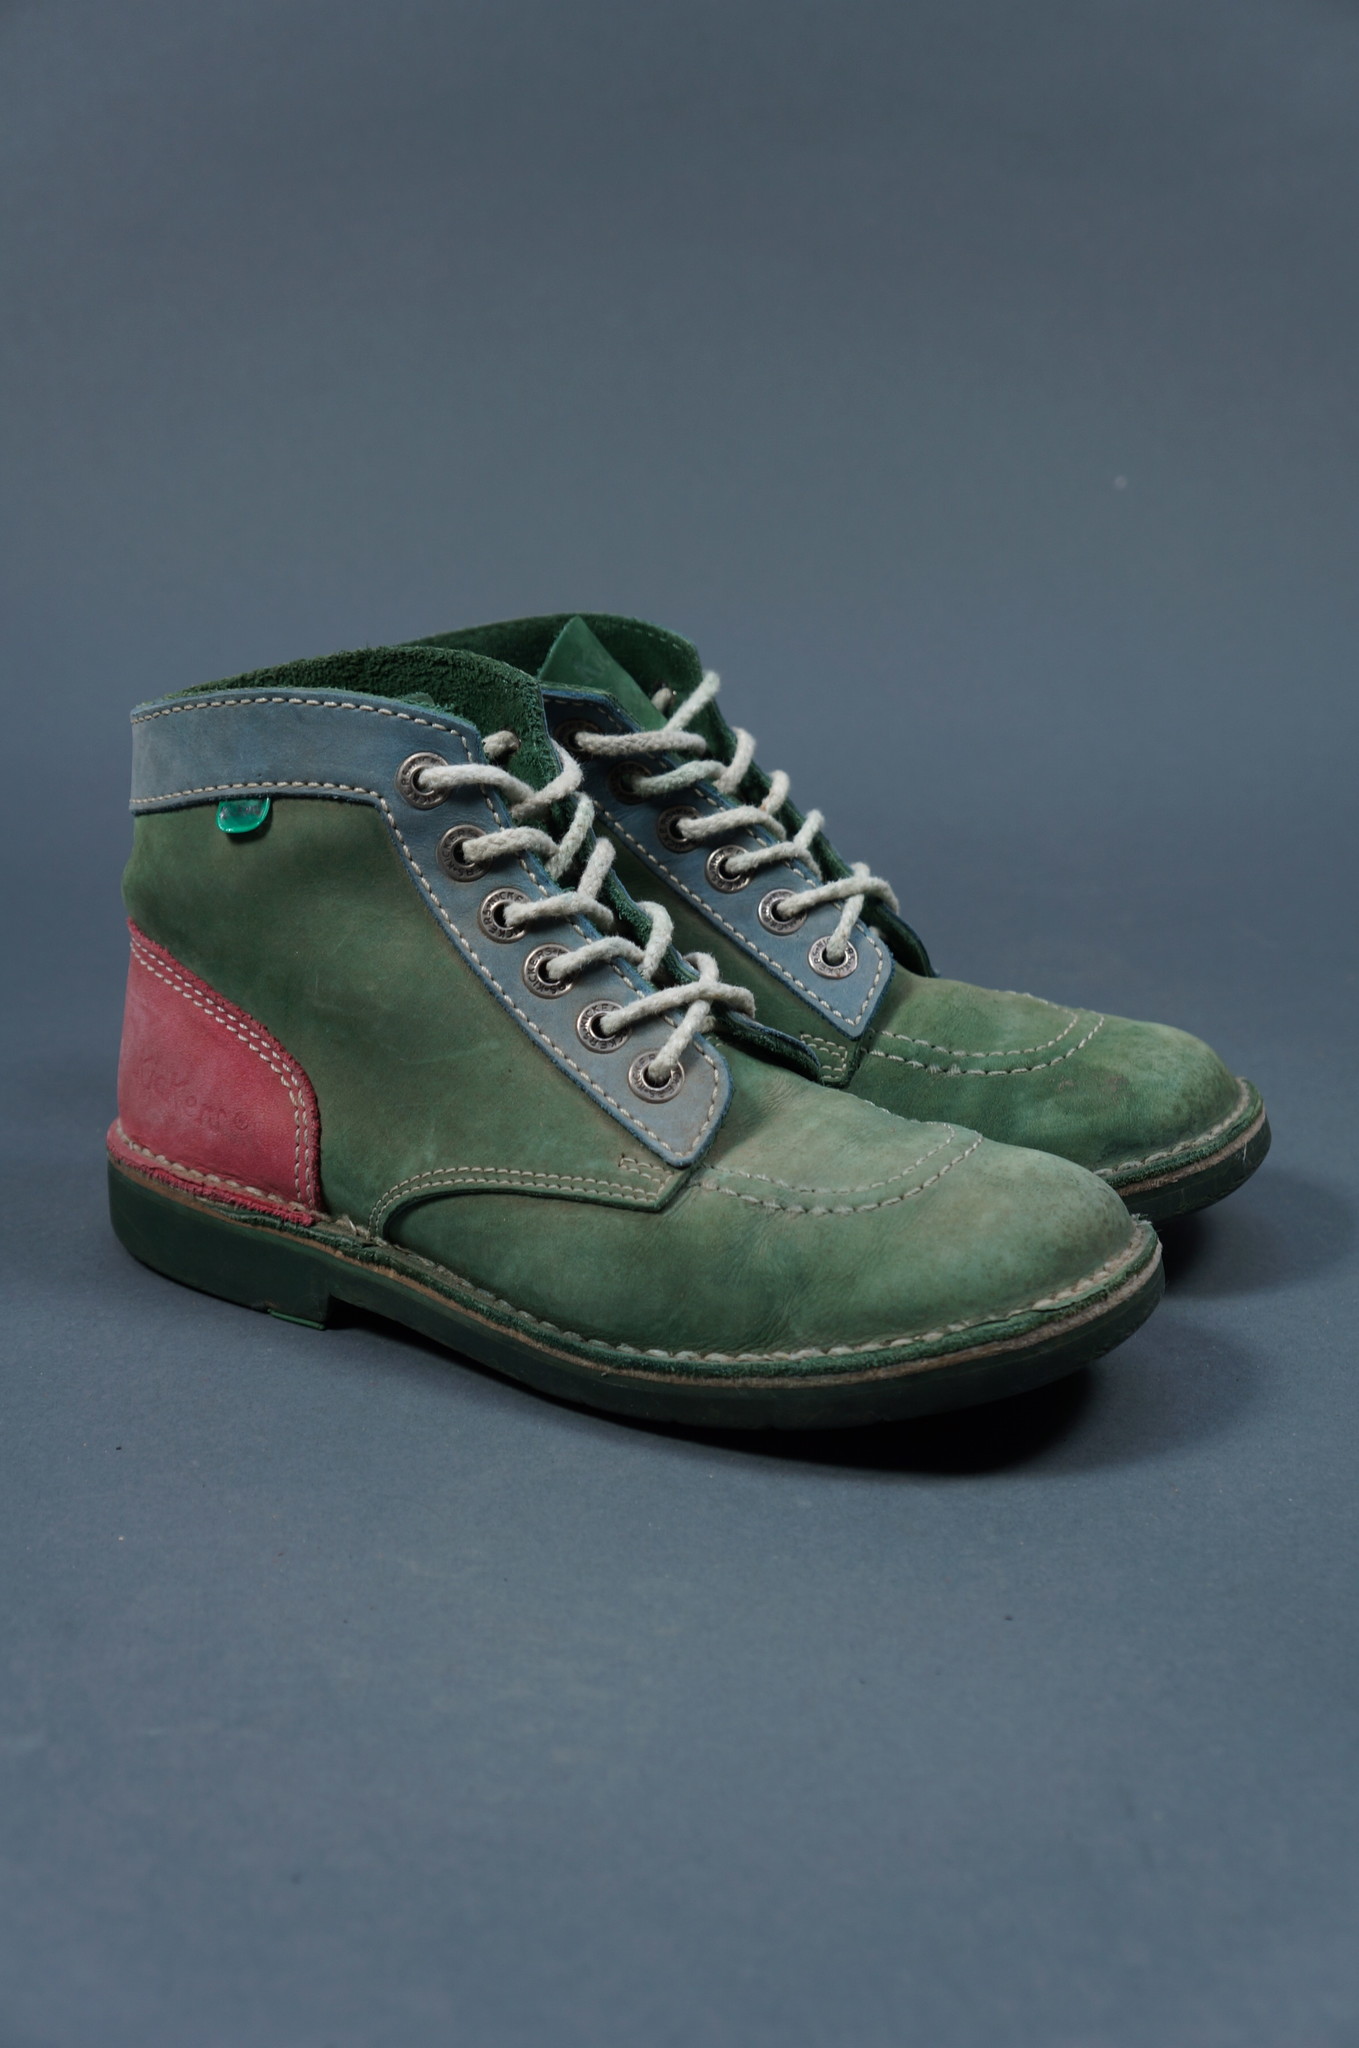 vintage kickers shoes